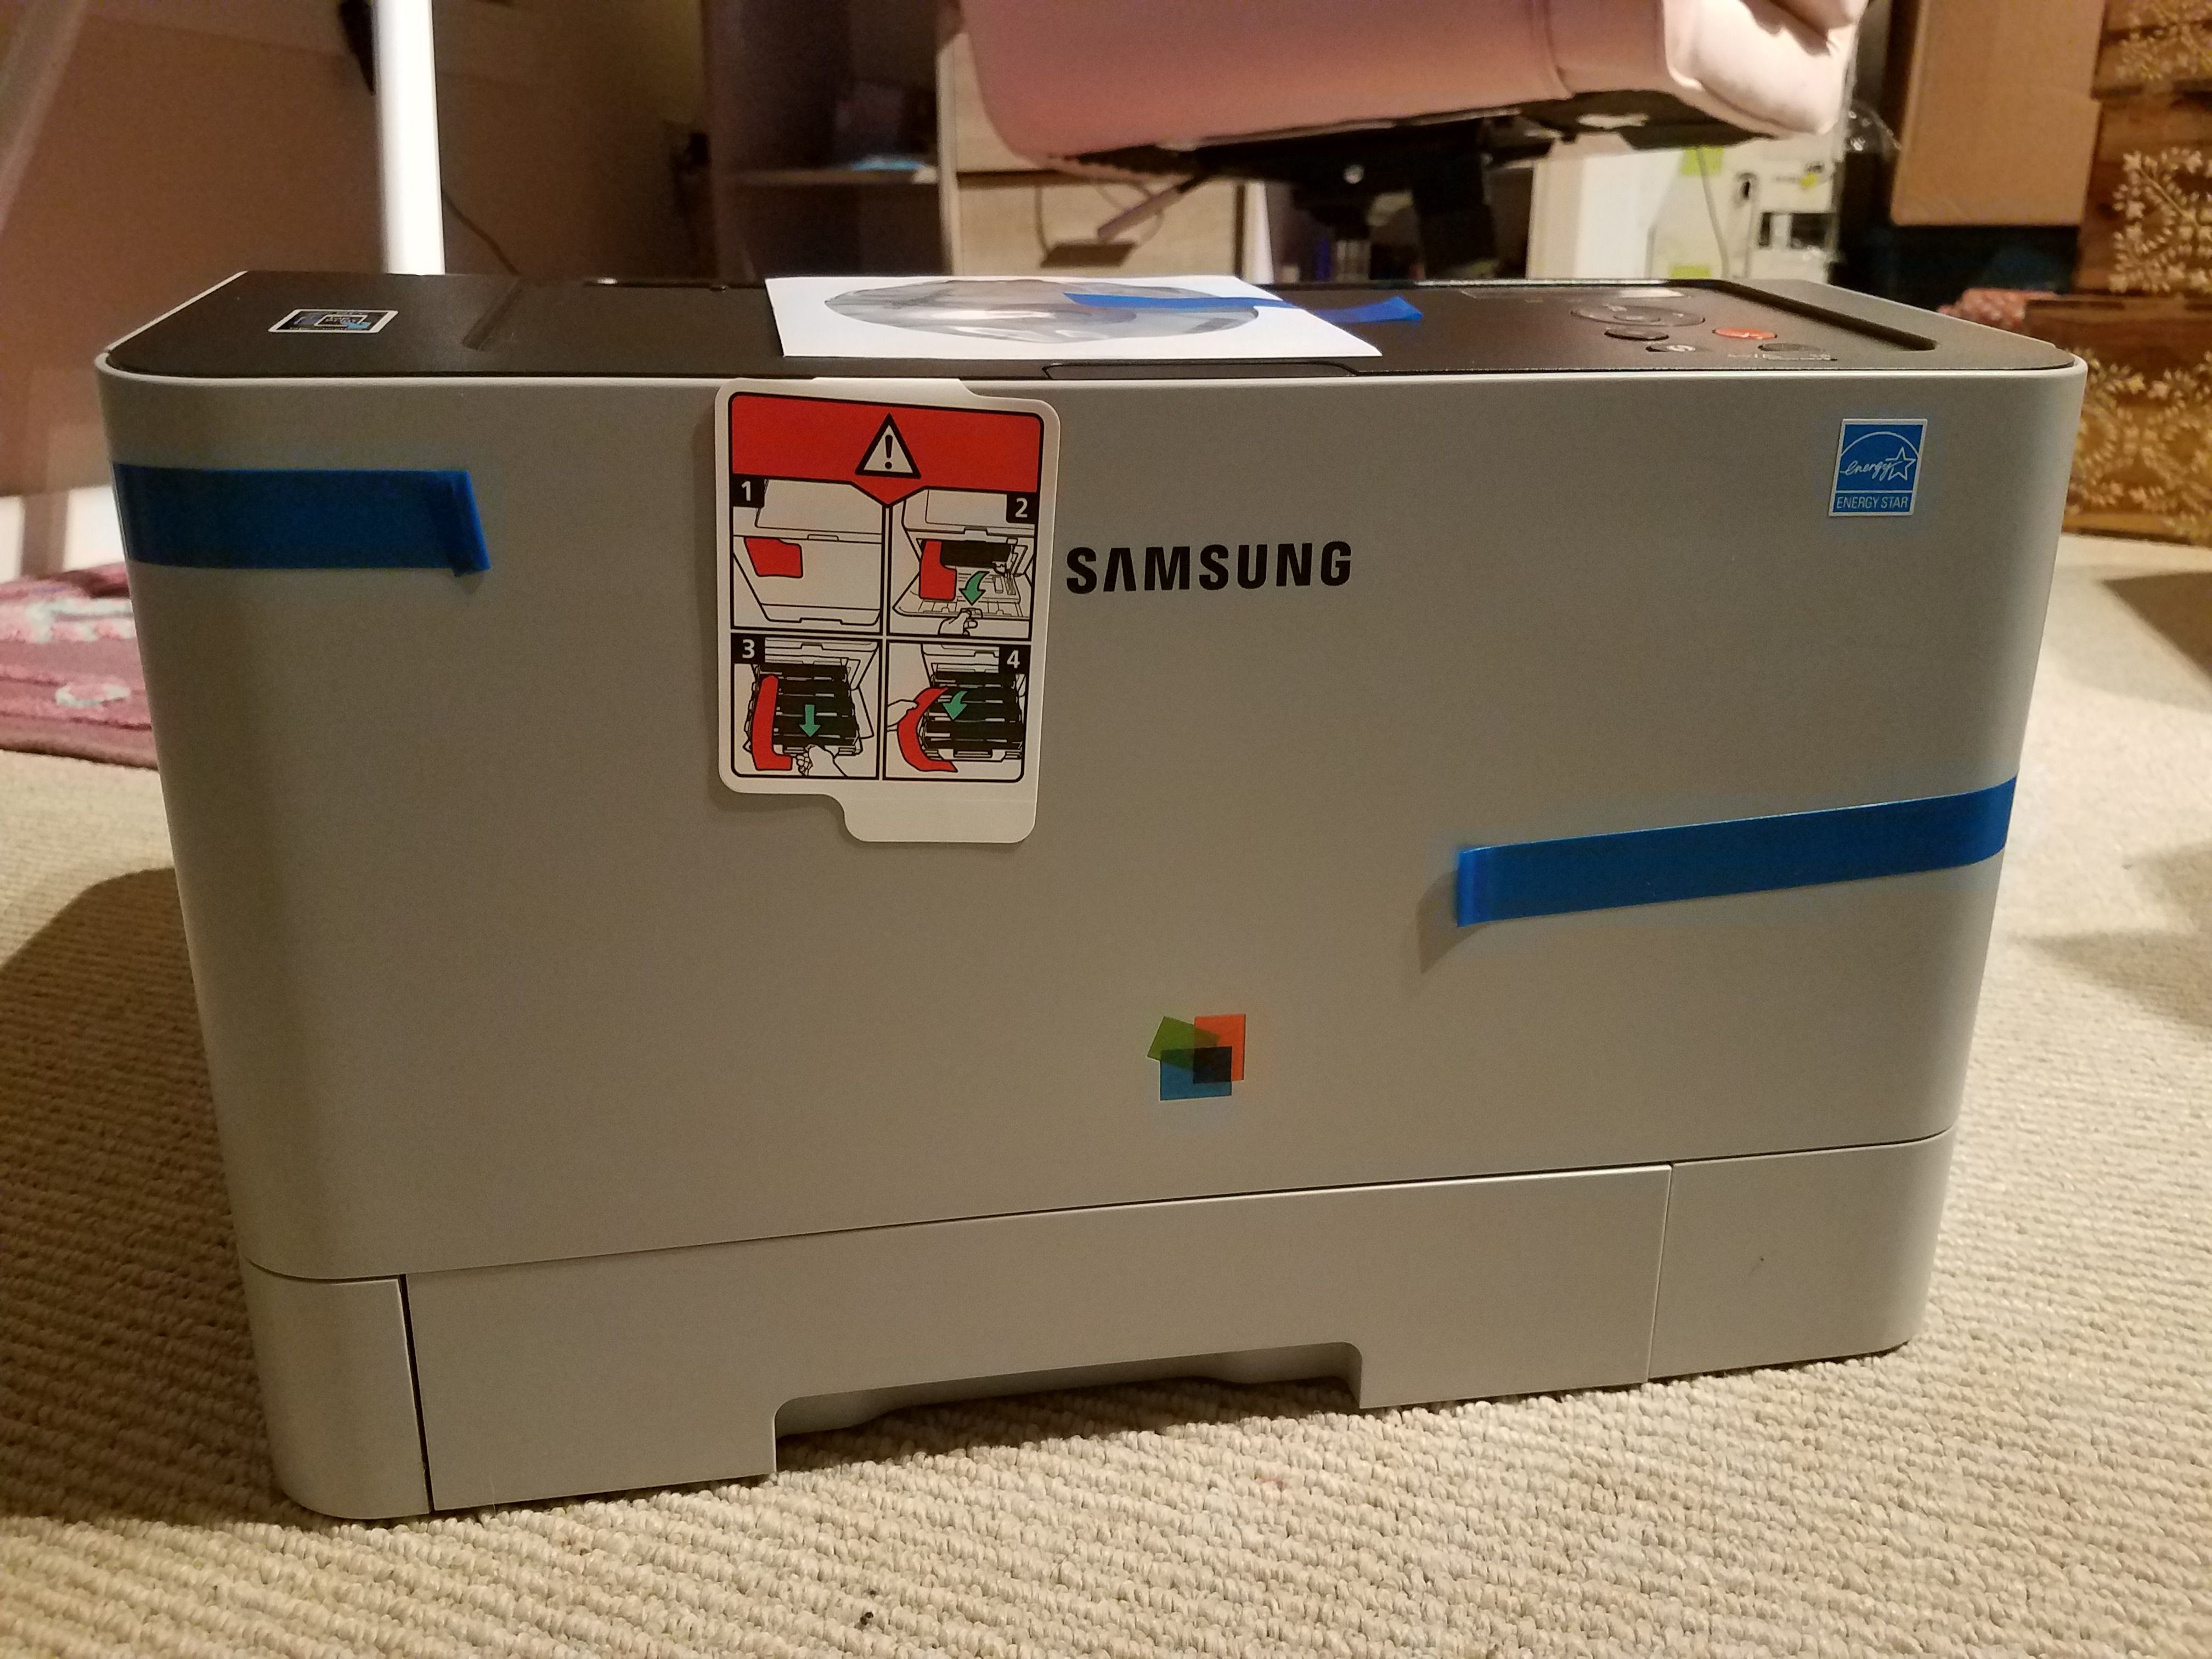 Samsung Printer Xpress C1810W